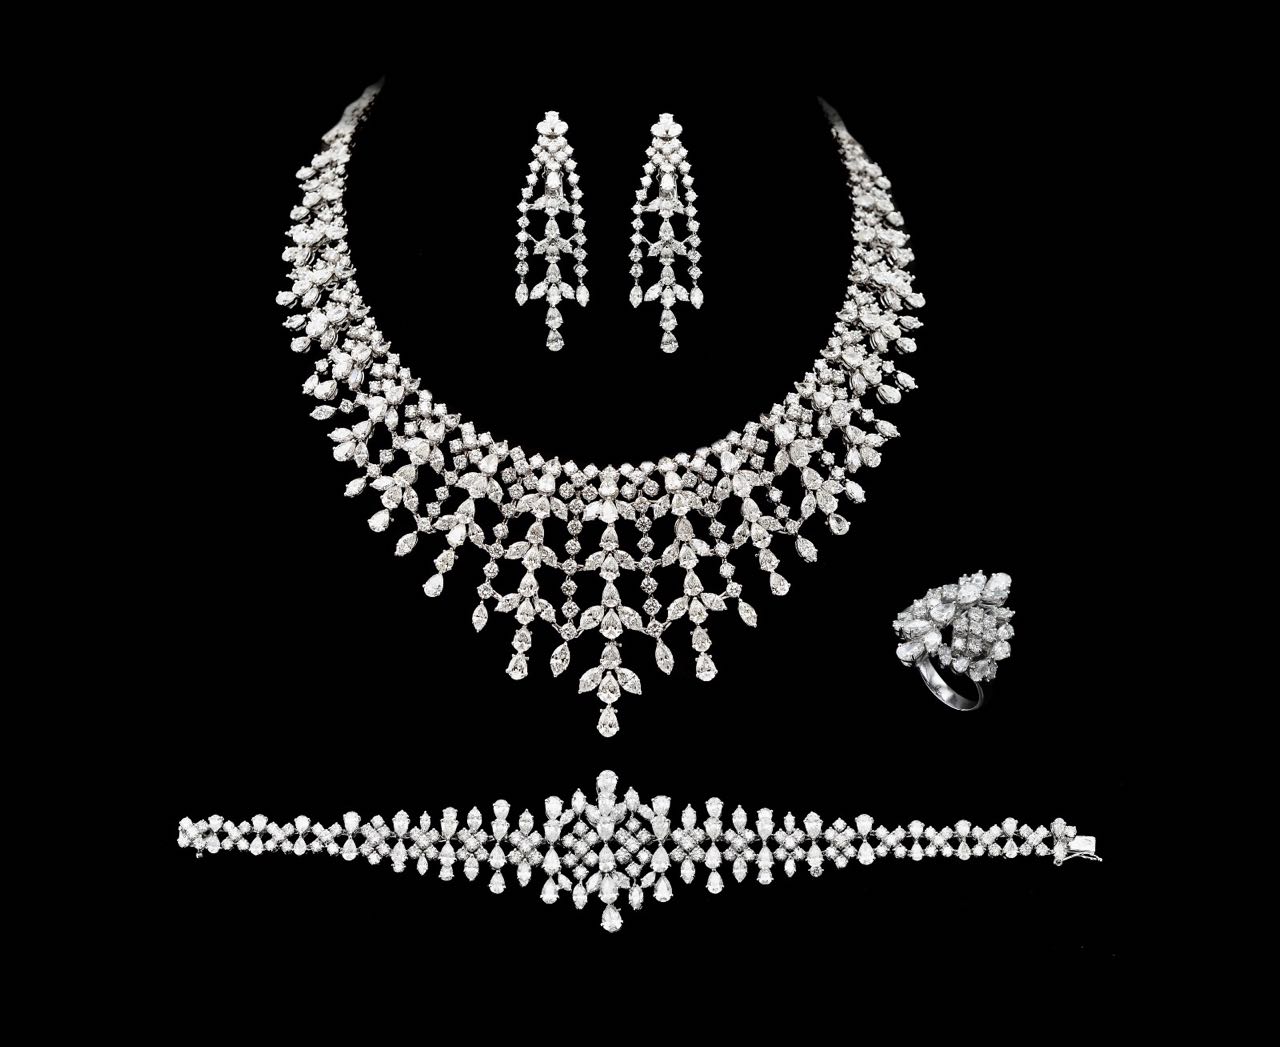 Diamond necklace, earrings, bracelet and ring set